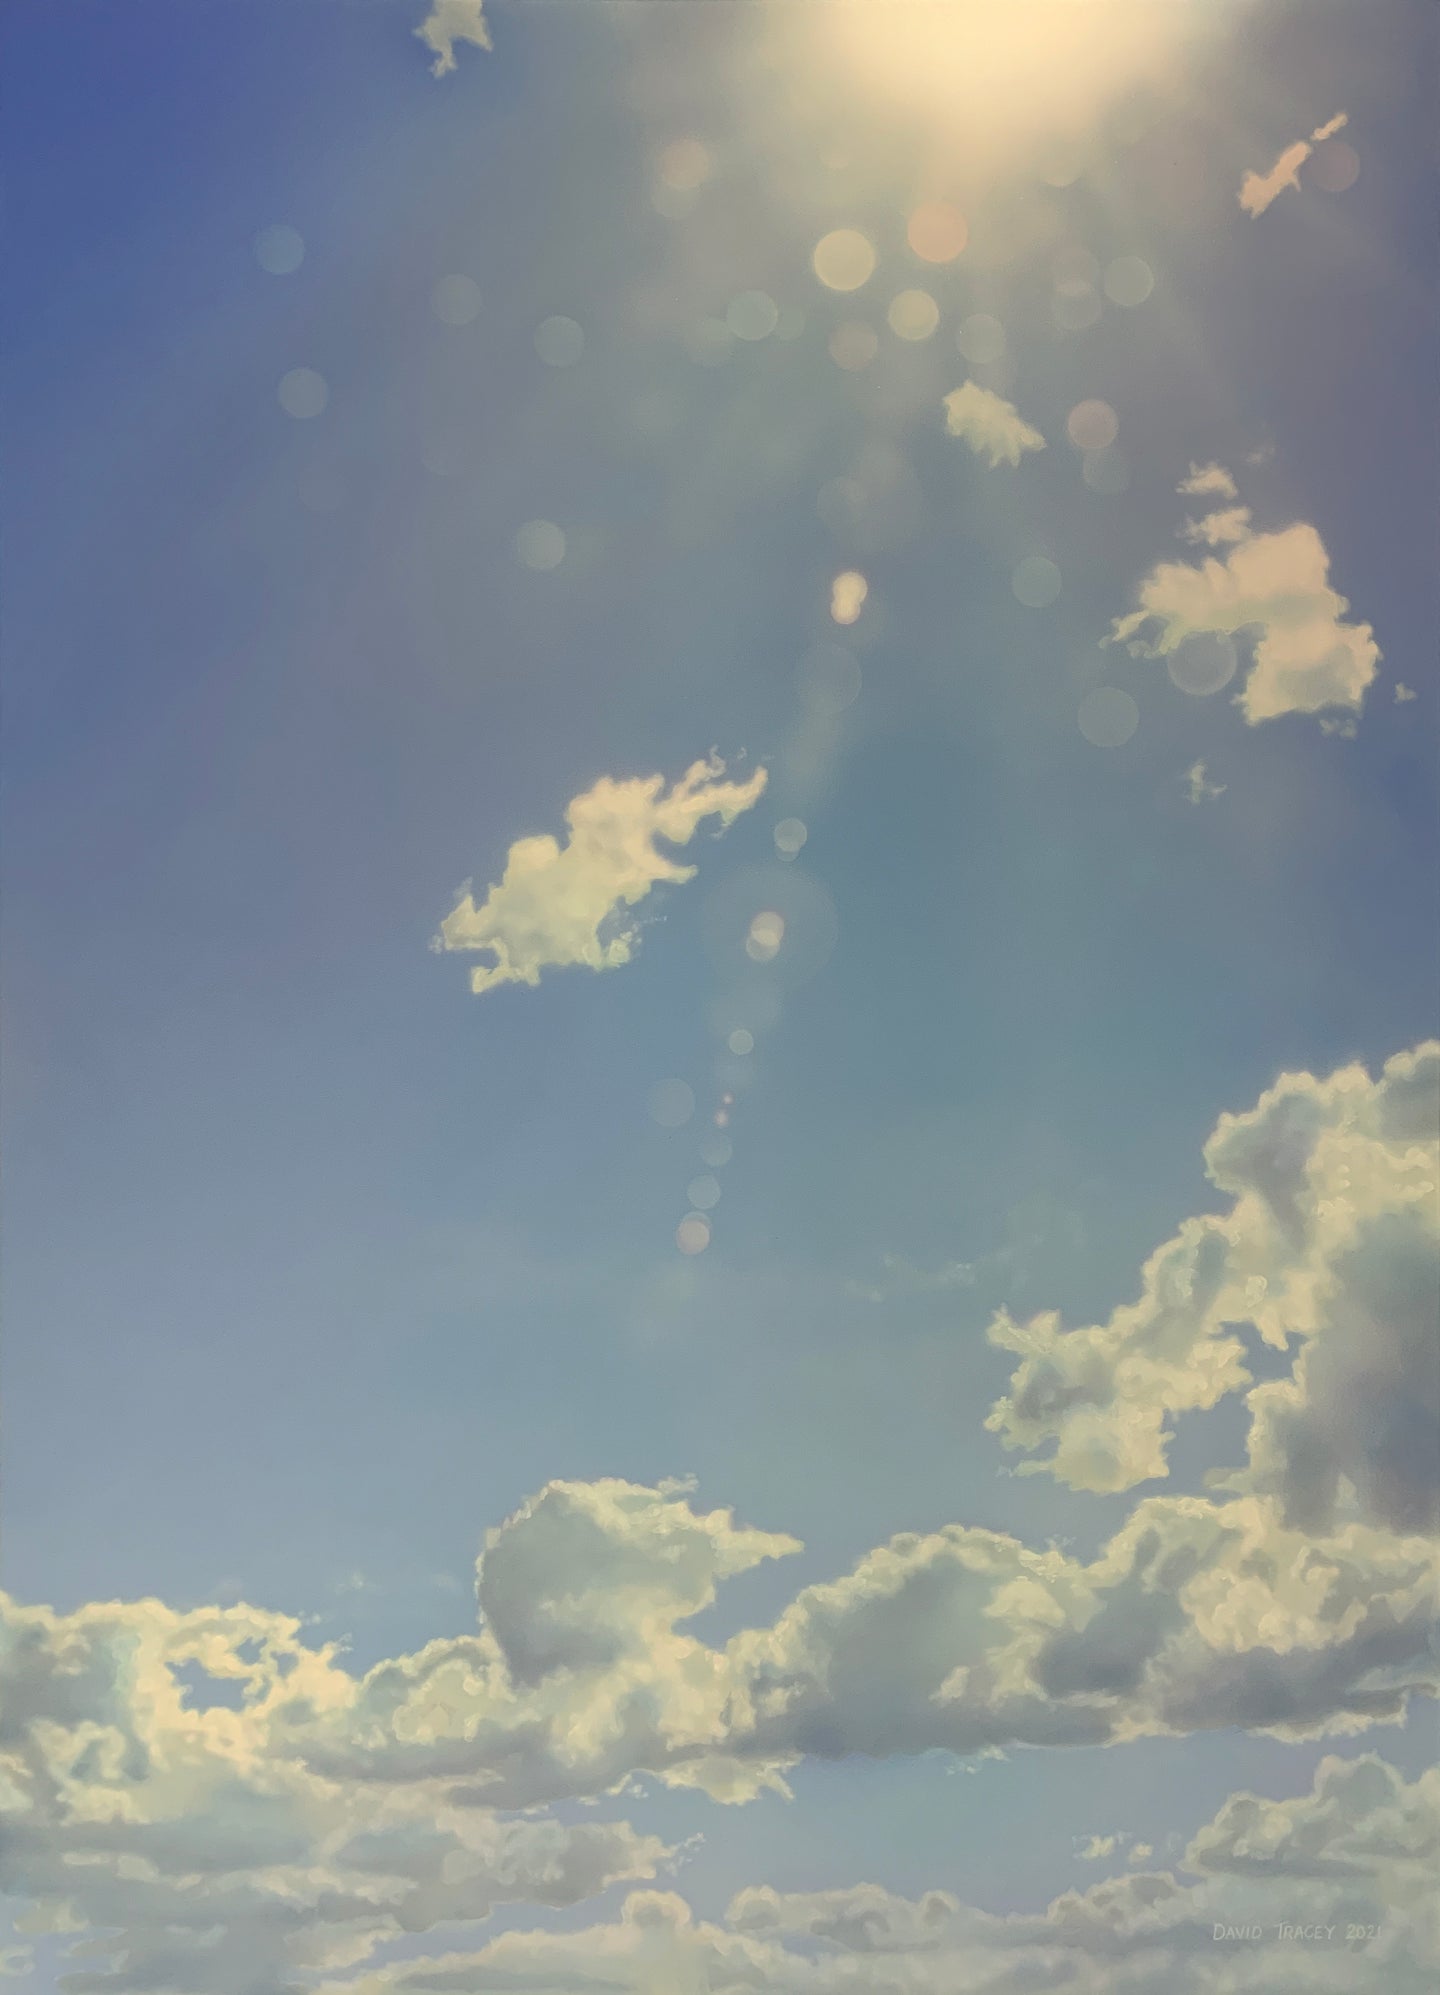 Sun Above, Cloud Below (1140 x 1580mm)